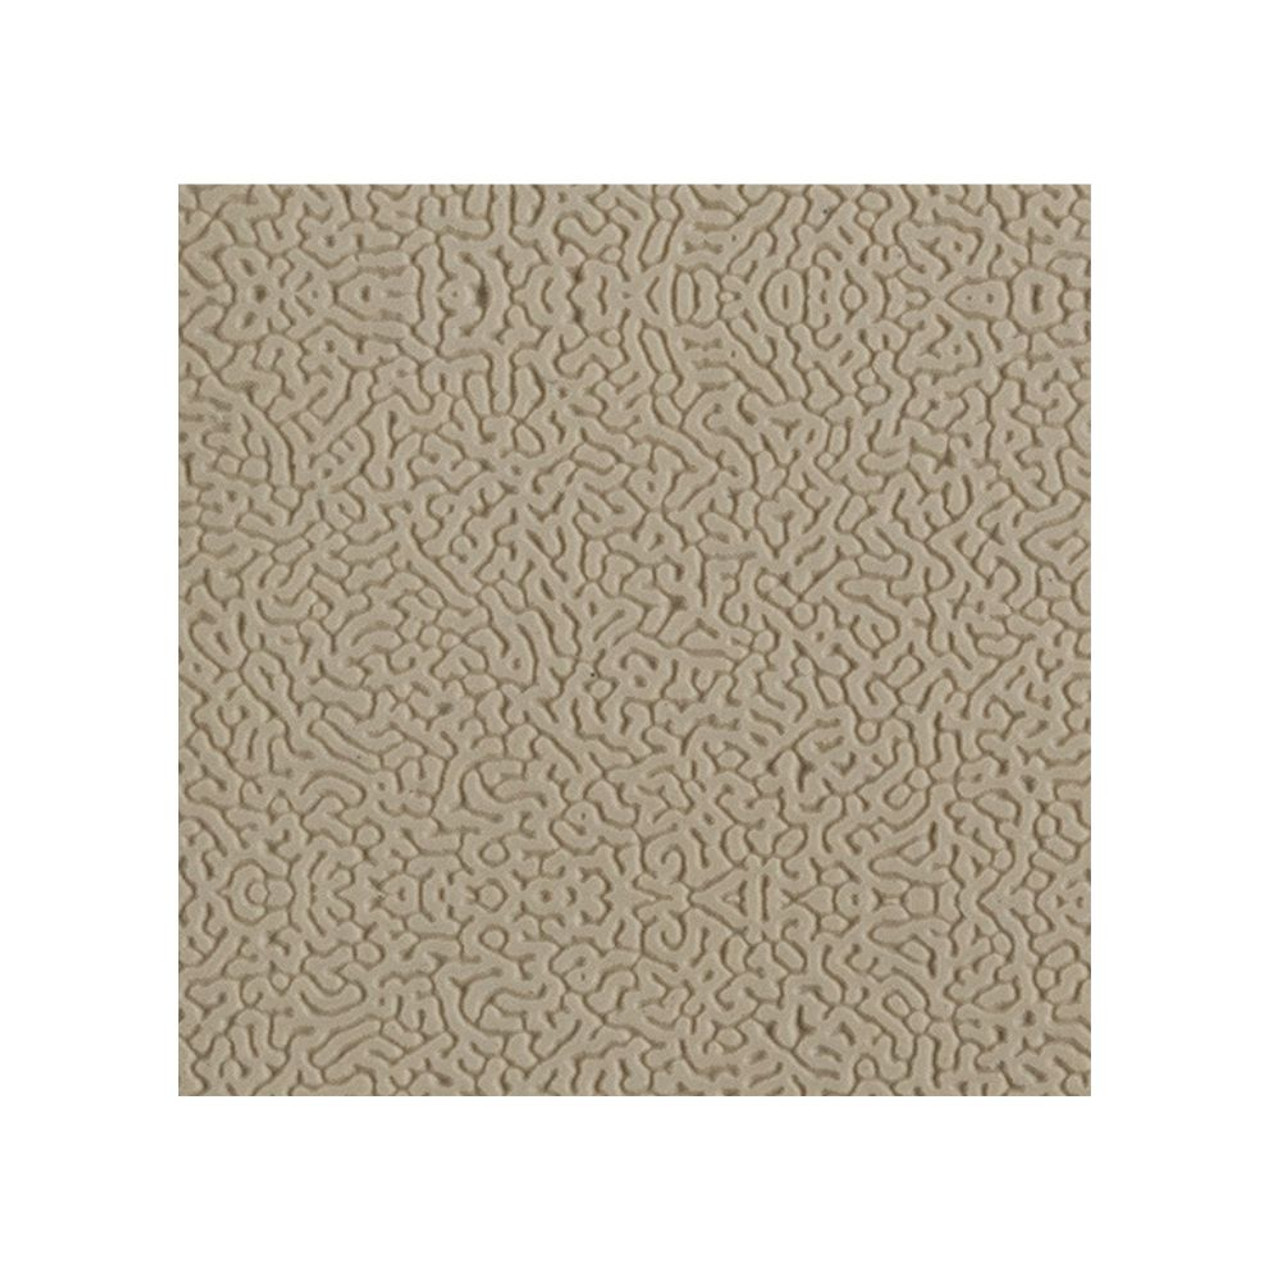  Texture Tile - Morphogenesis close up